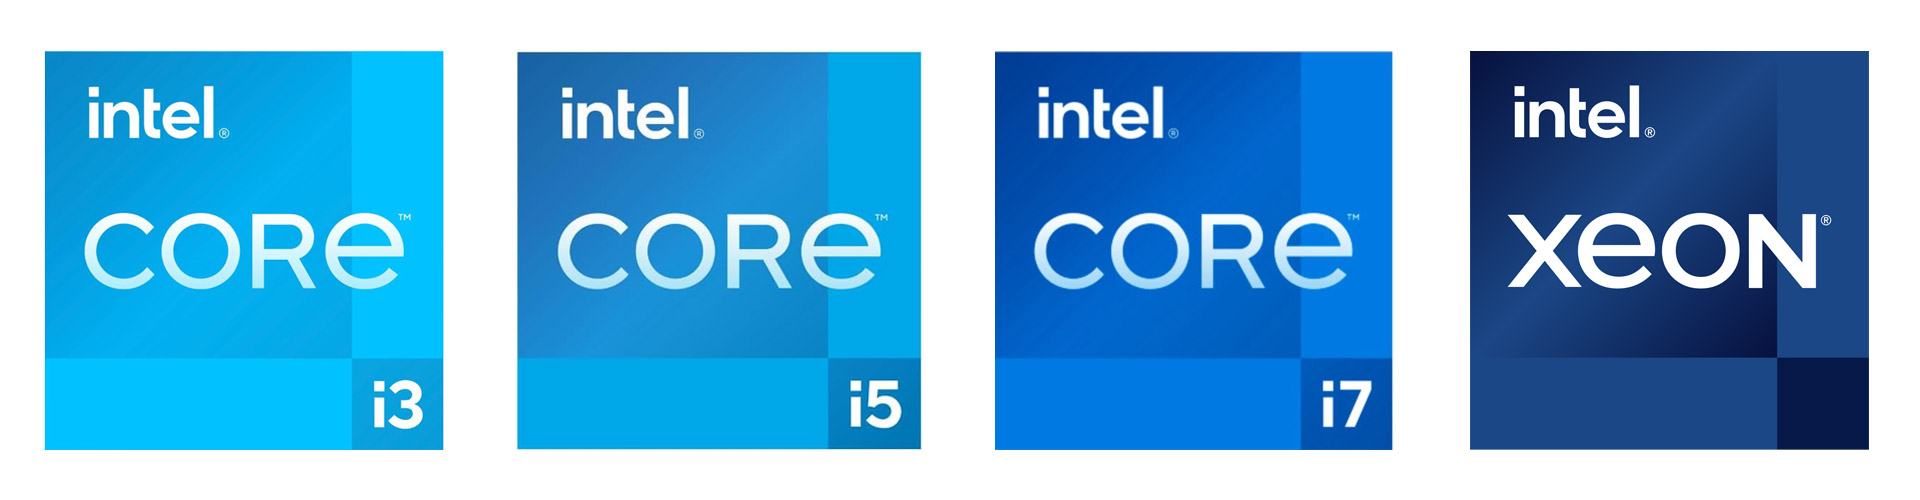 Logos Intel Xeon et Core